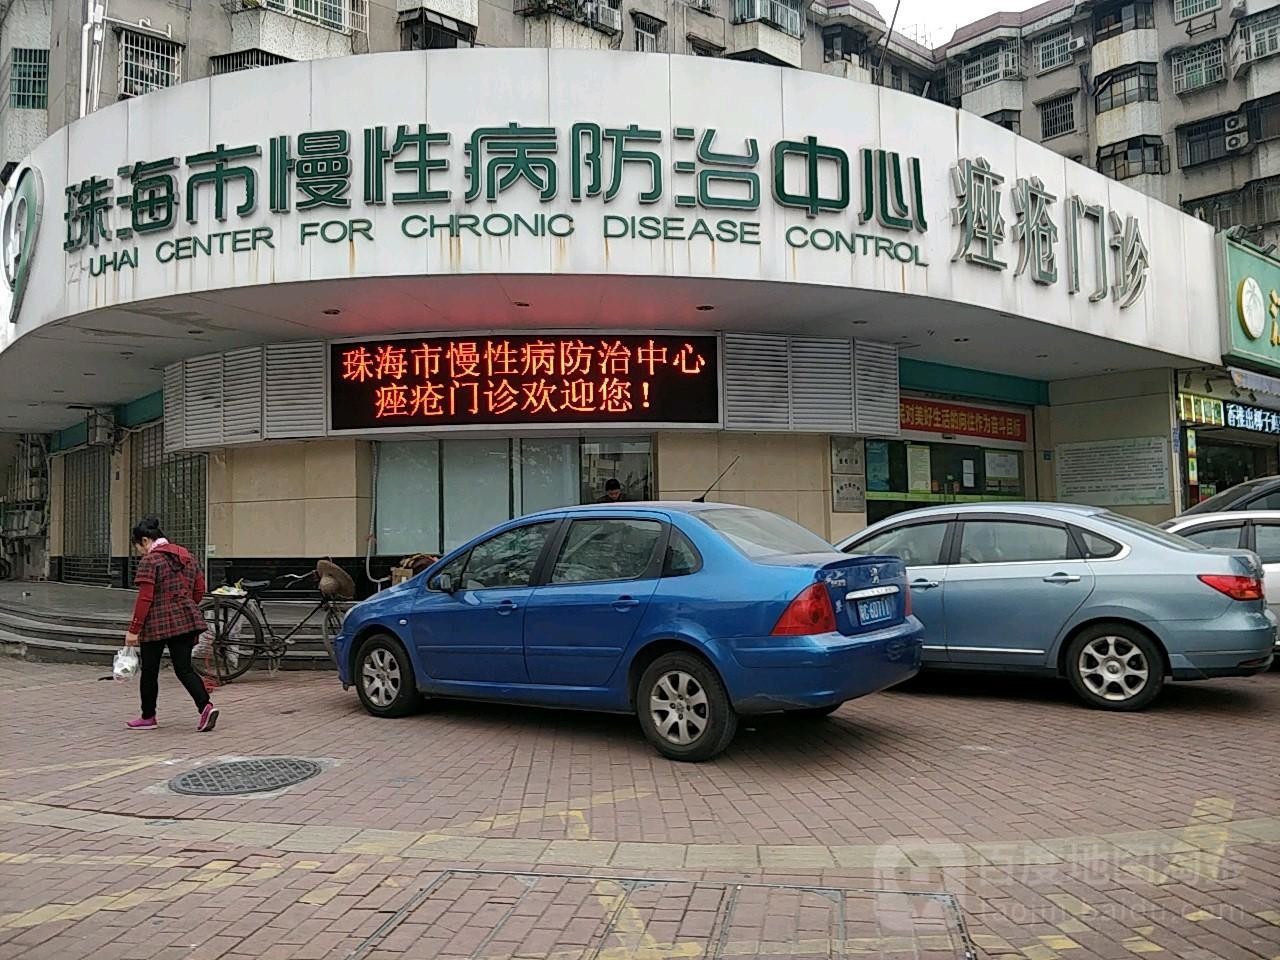 Latest company case about The Third Hospital of Zhuhai